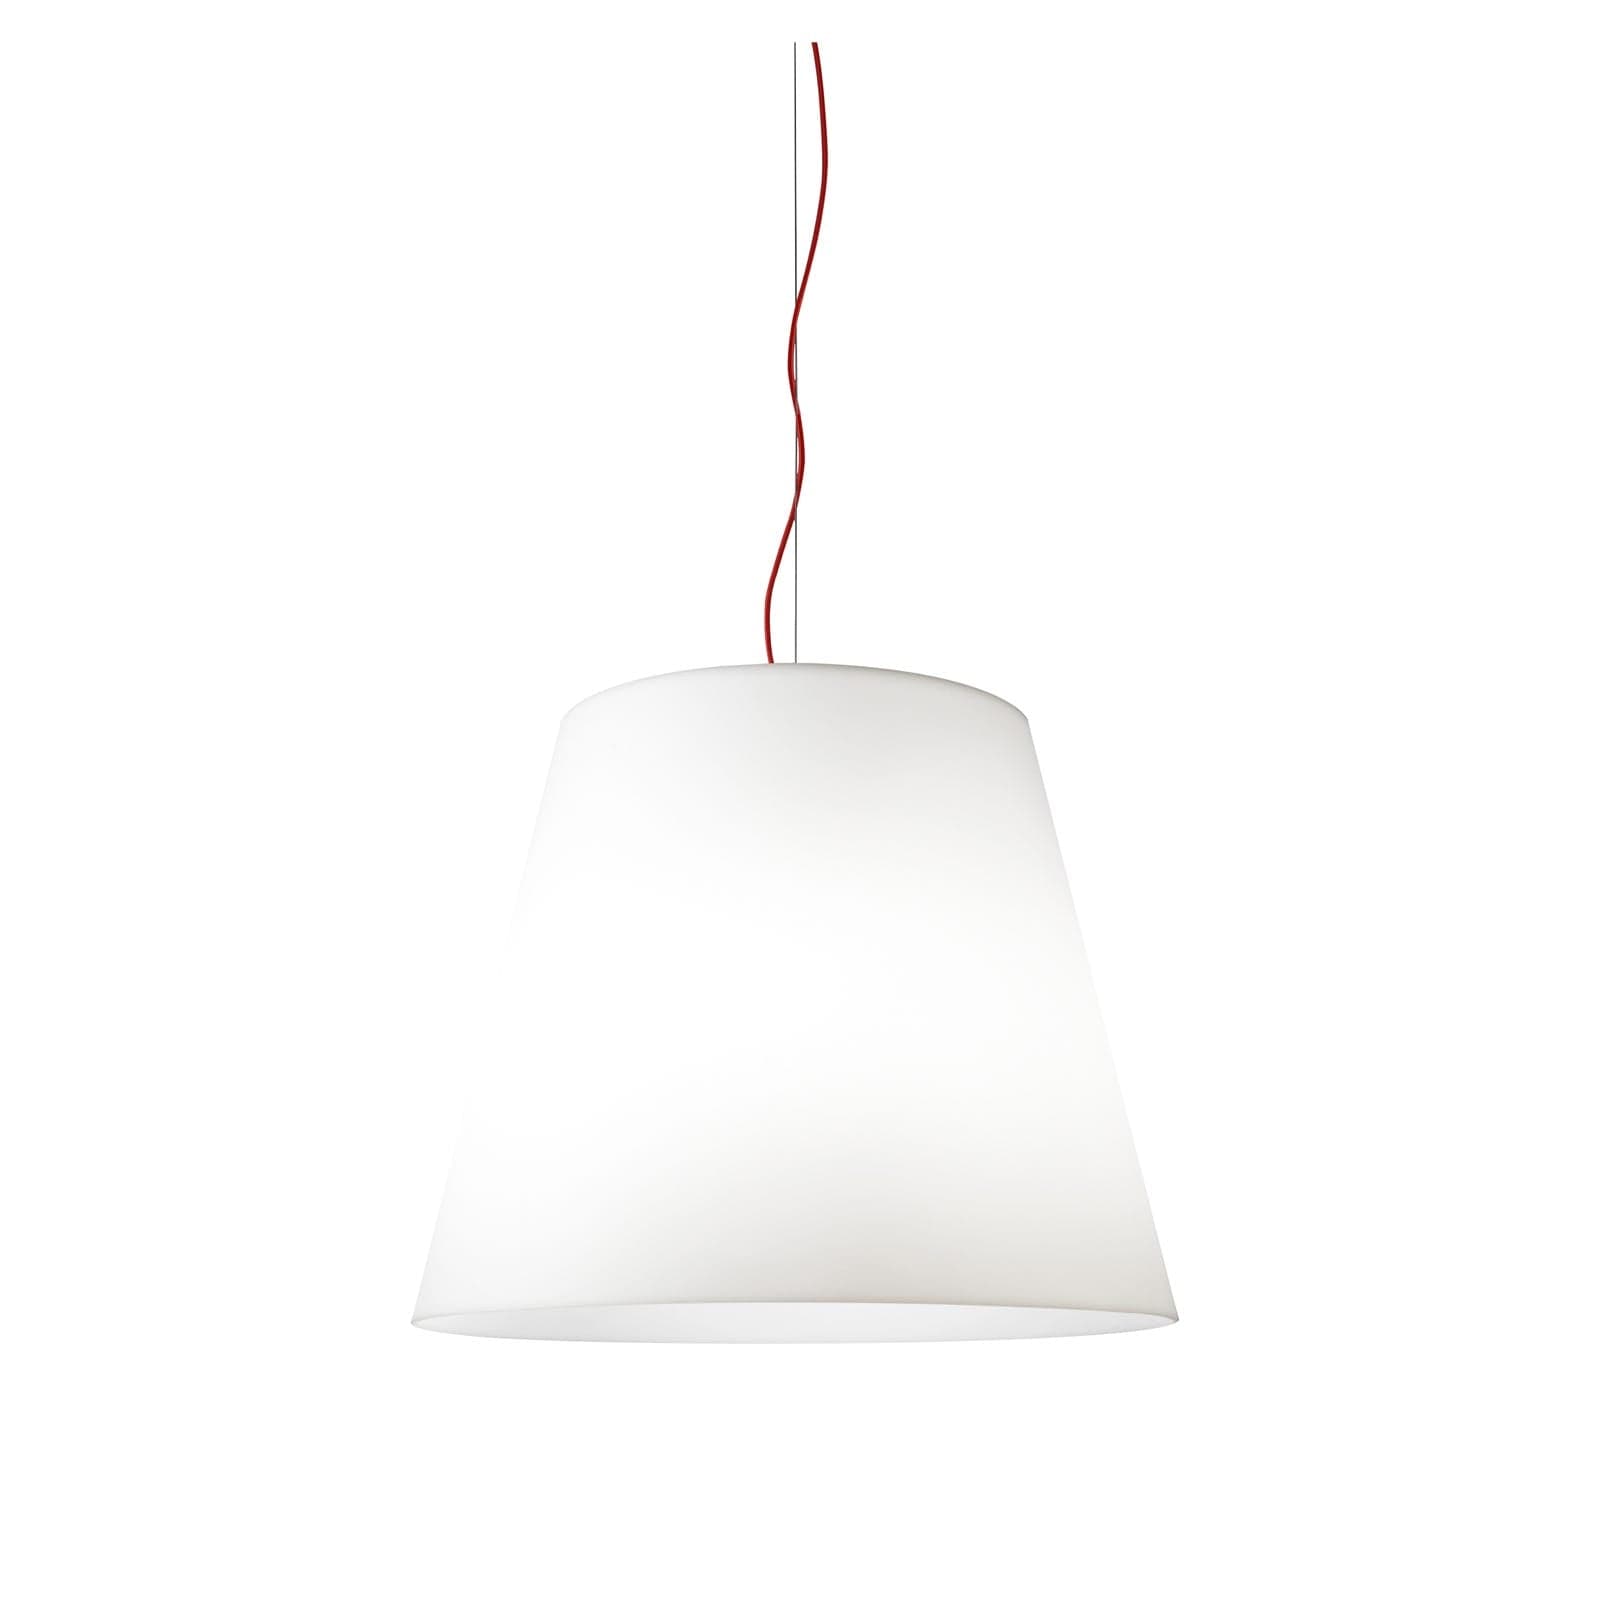 Attent Specimen Razernij Suspension Lamp AMAX Large by Charles Williams for FontanaArte – Design  Italy